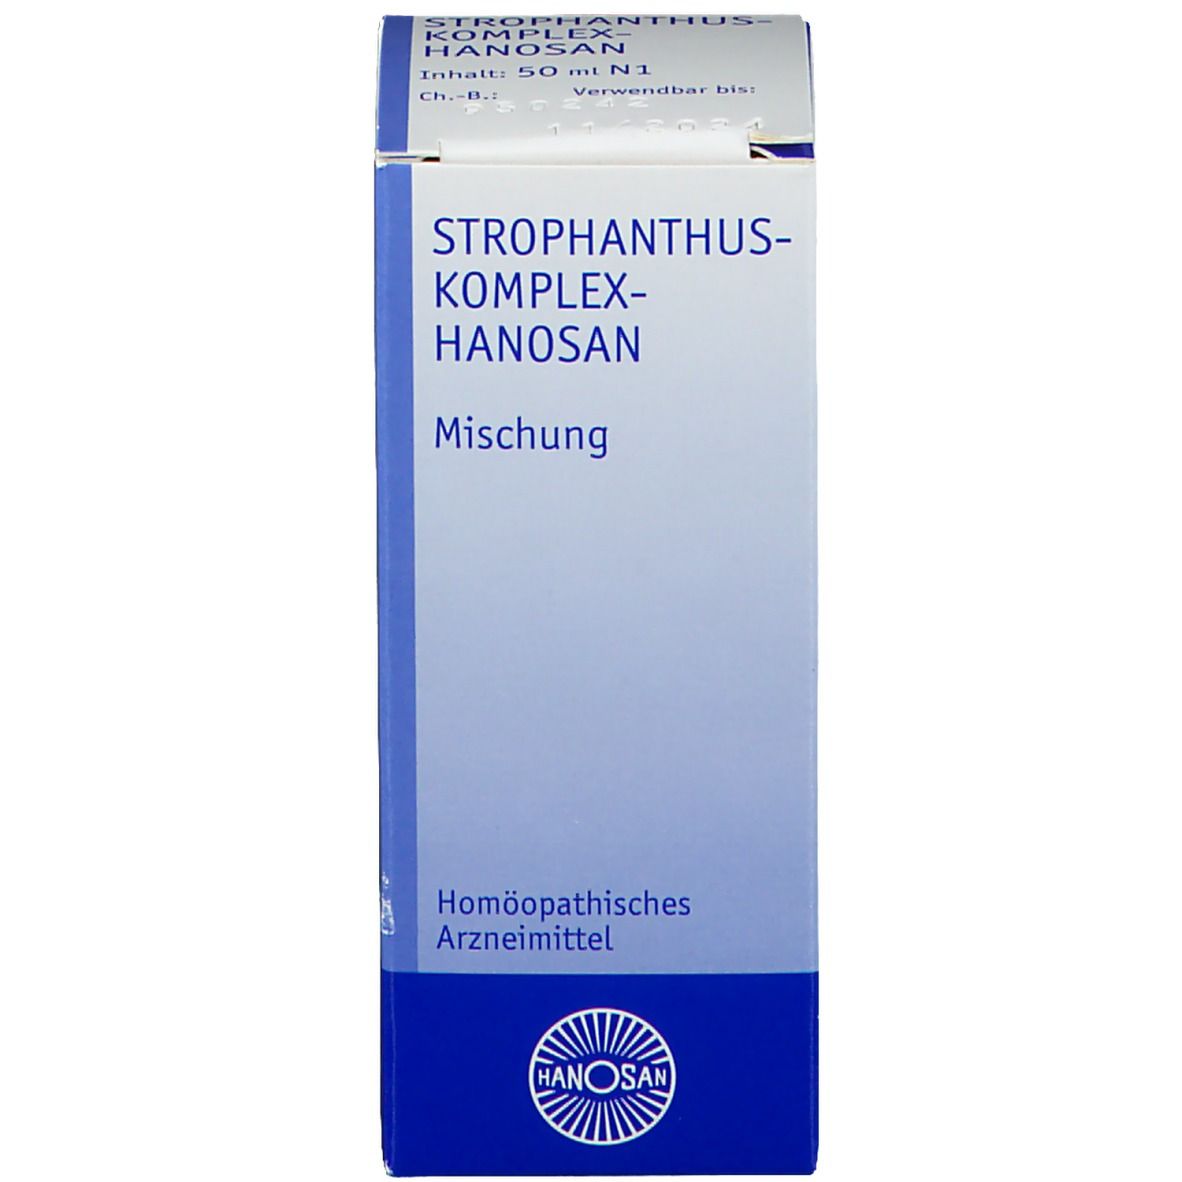 Strophanthus-Komplex-Hanosan